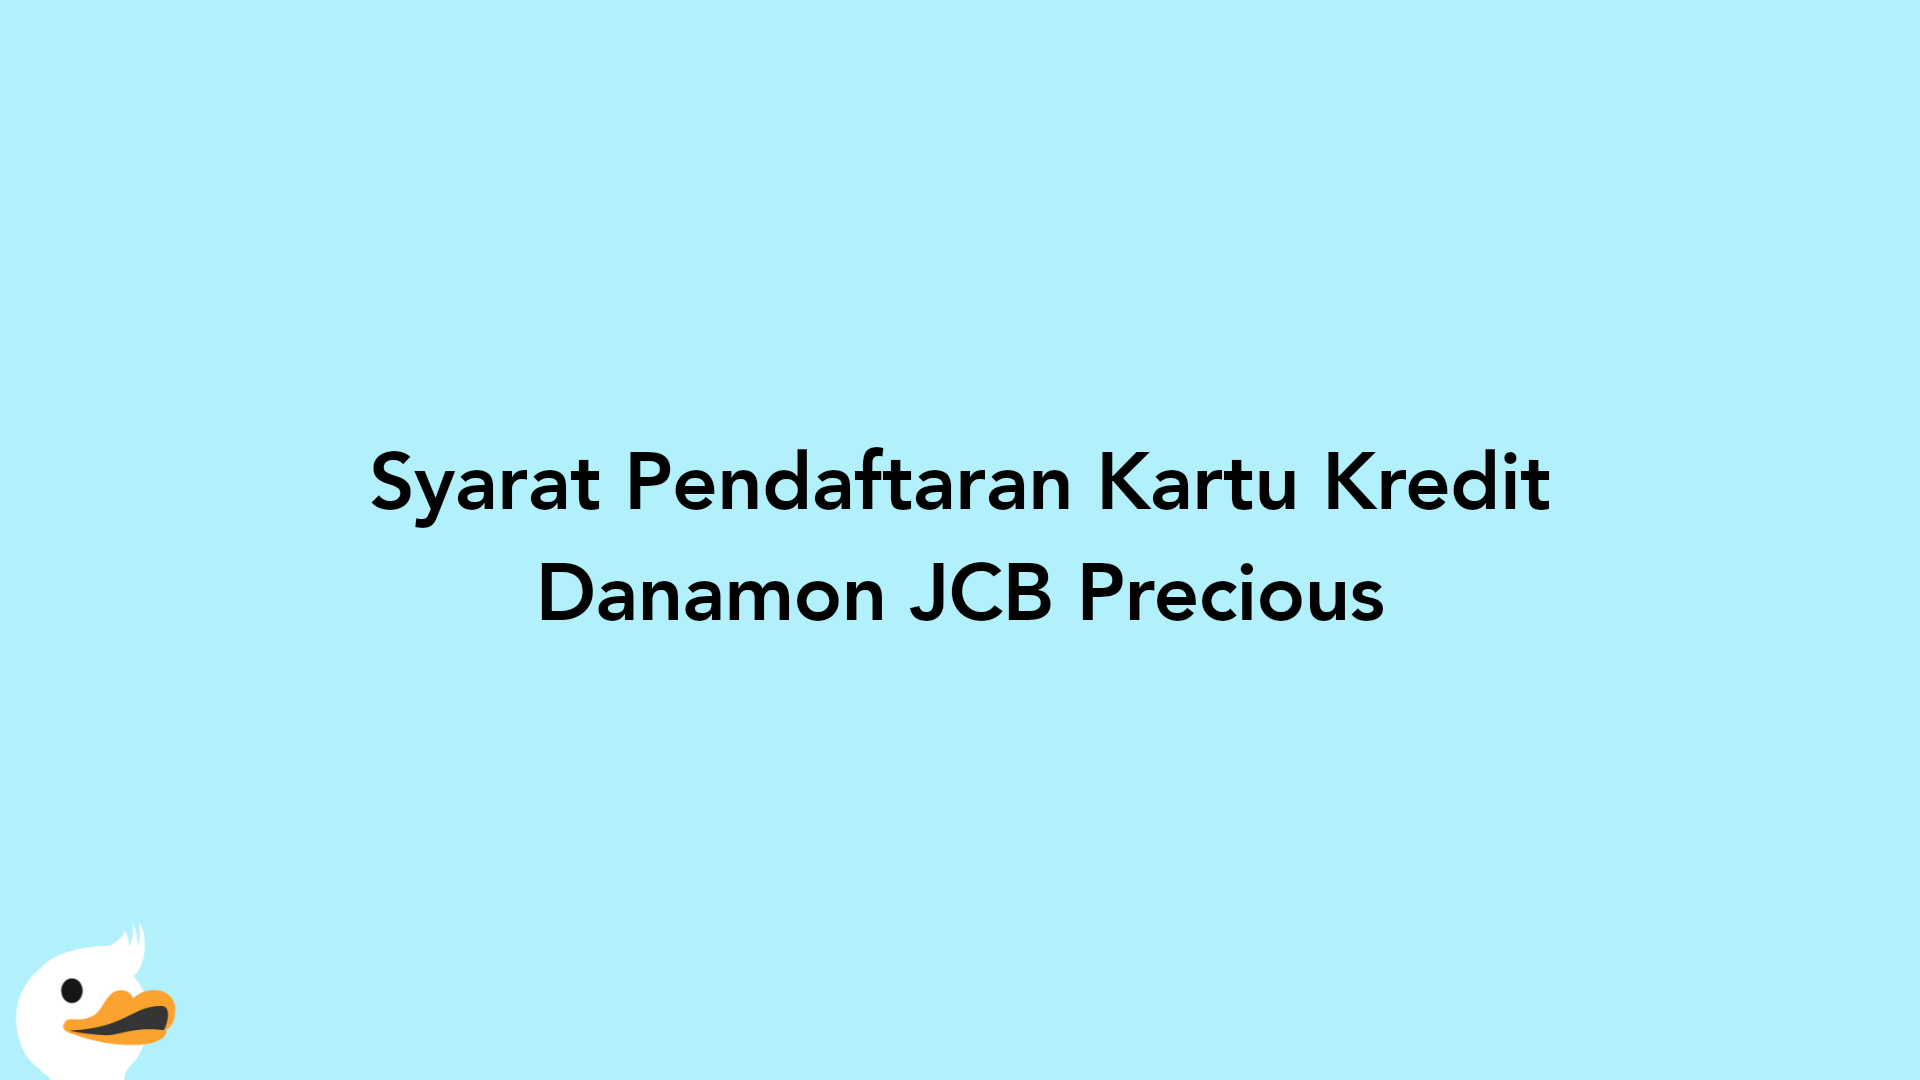 Syarat Pendaftaran Kartu Kredit Danamon JCB Precious